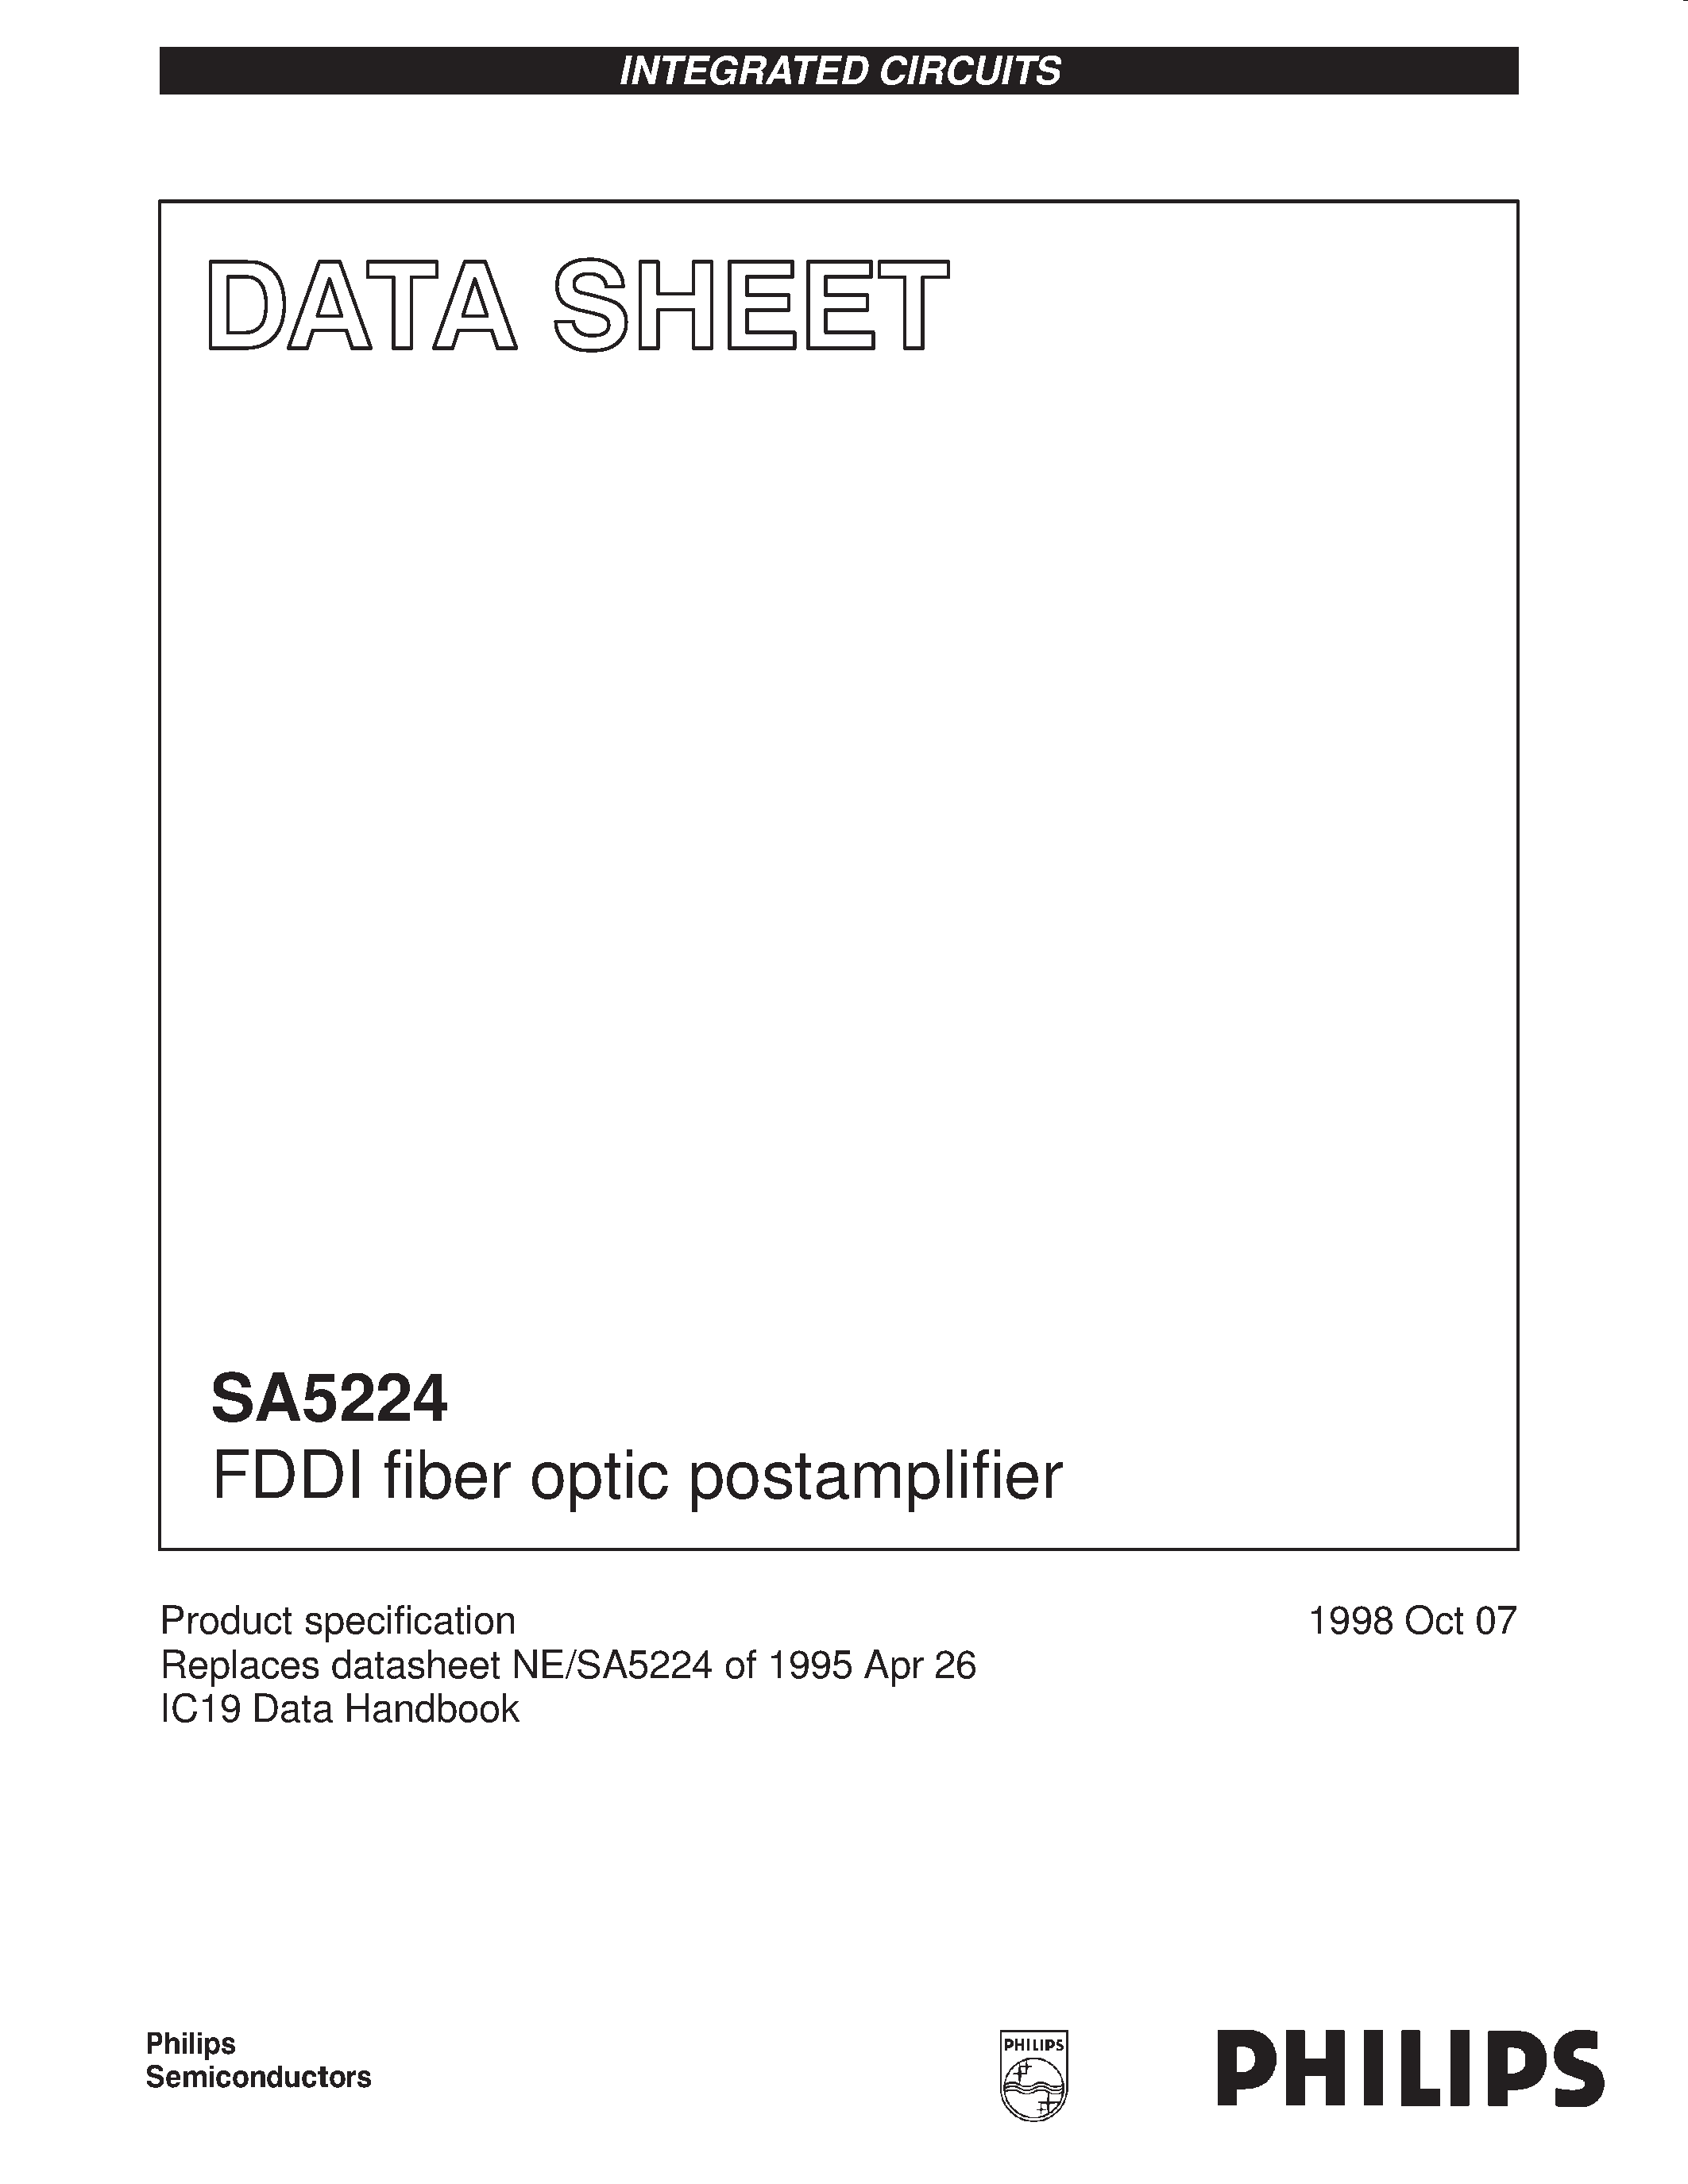 Даташит SA5224 - FDDI fiber optic postamplifier страница 1